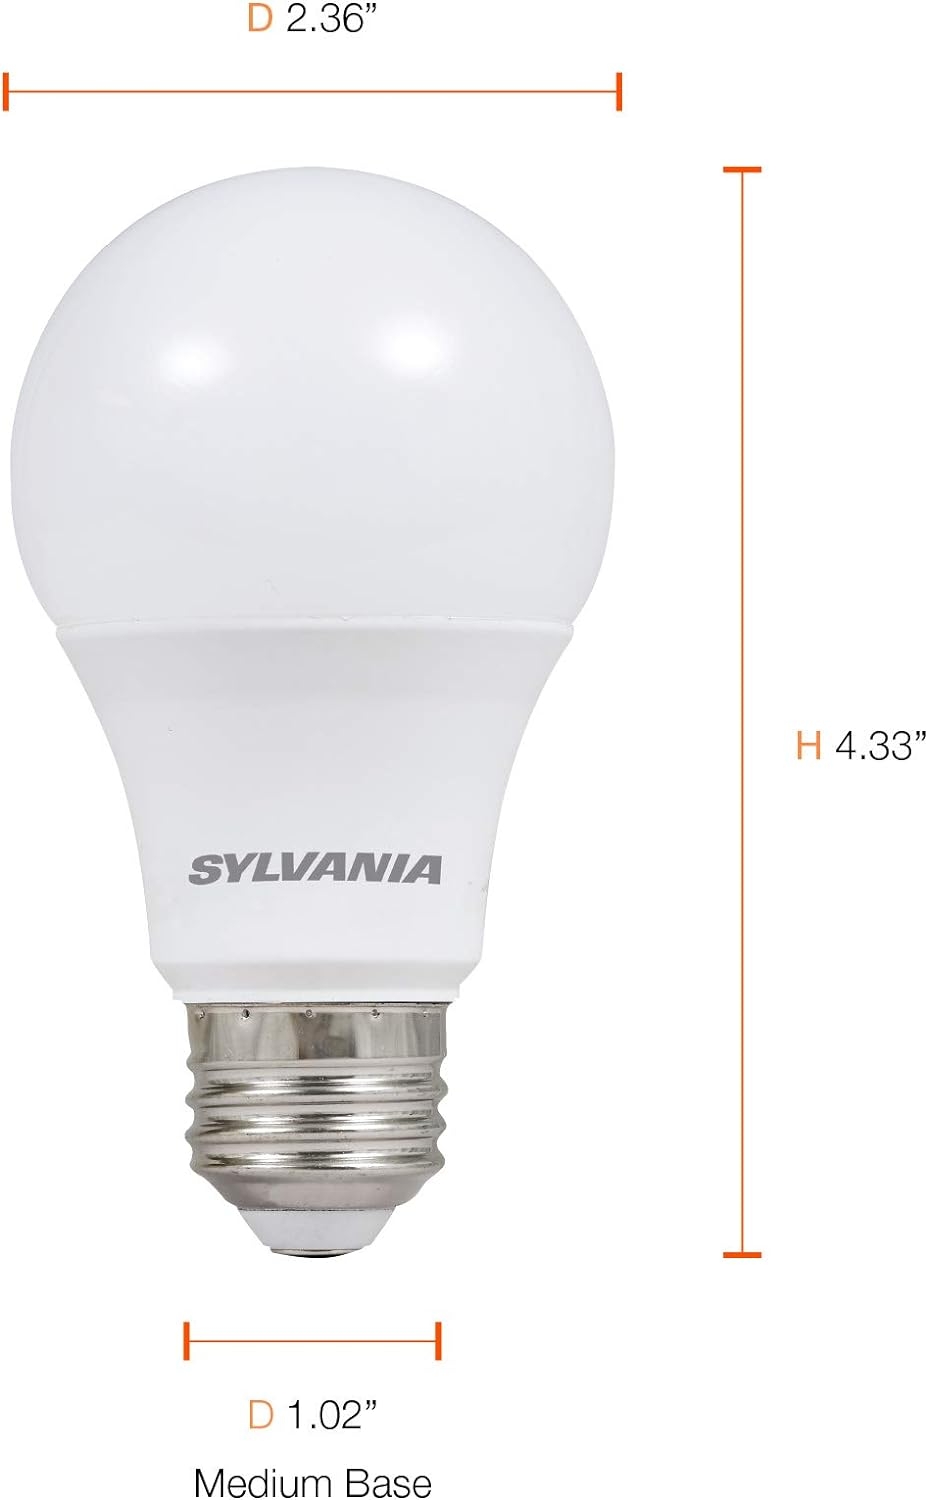 SYLVANIA General Lighting 73888 046135738883 SYLVANIA, 60W Equivalent, LED Light Bulb, A19 Lamp, 4 Pack, Soft White, Energy Saving & Longer Life, Medium Base, Efficient 8.5W, 2700K, 4